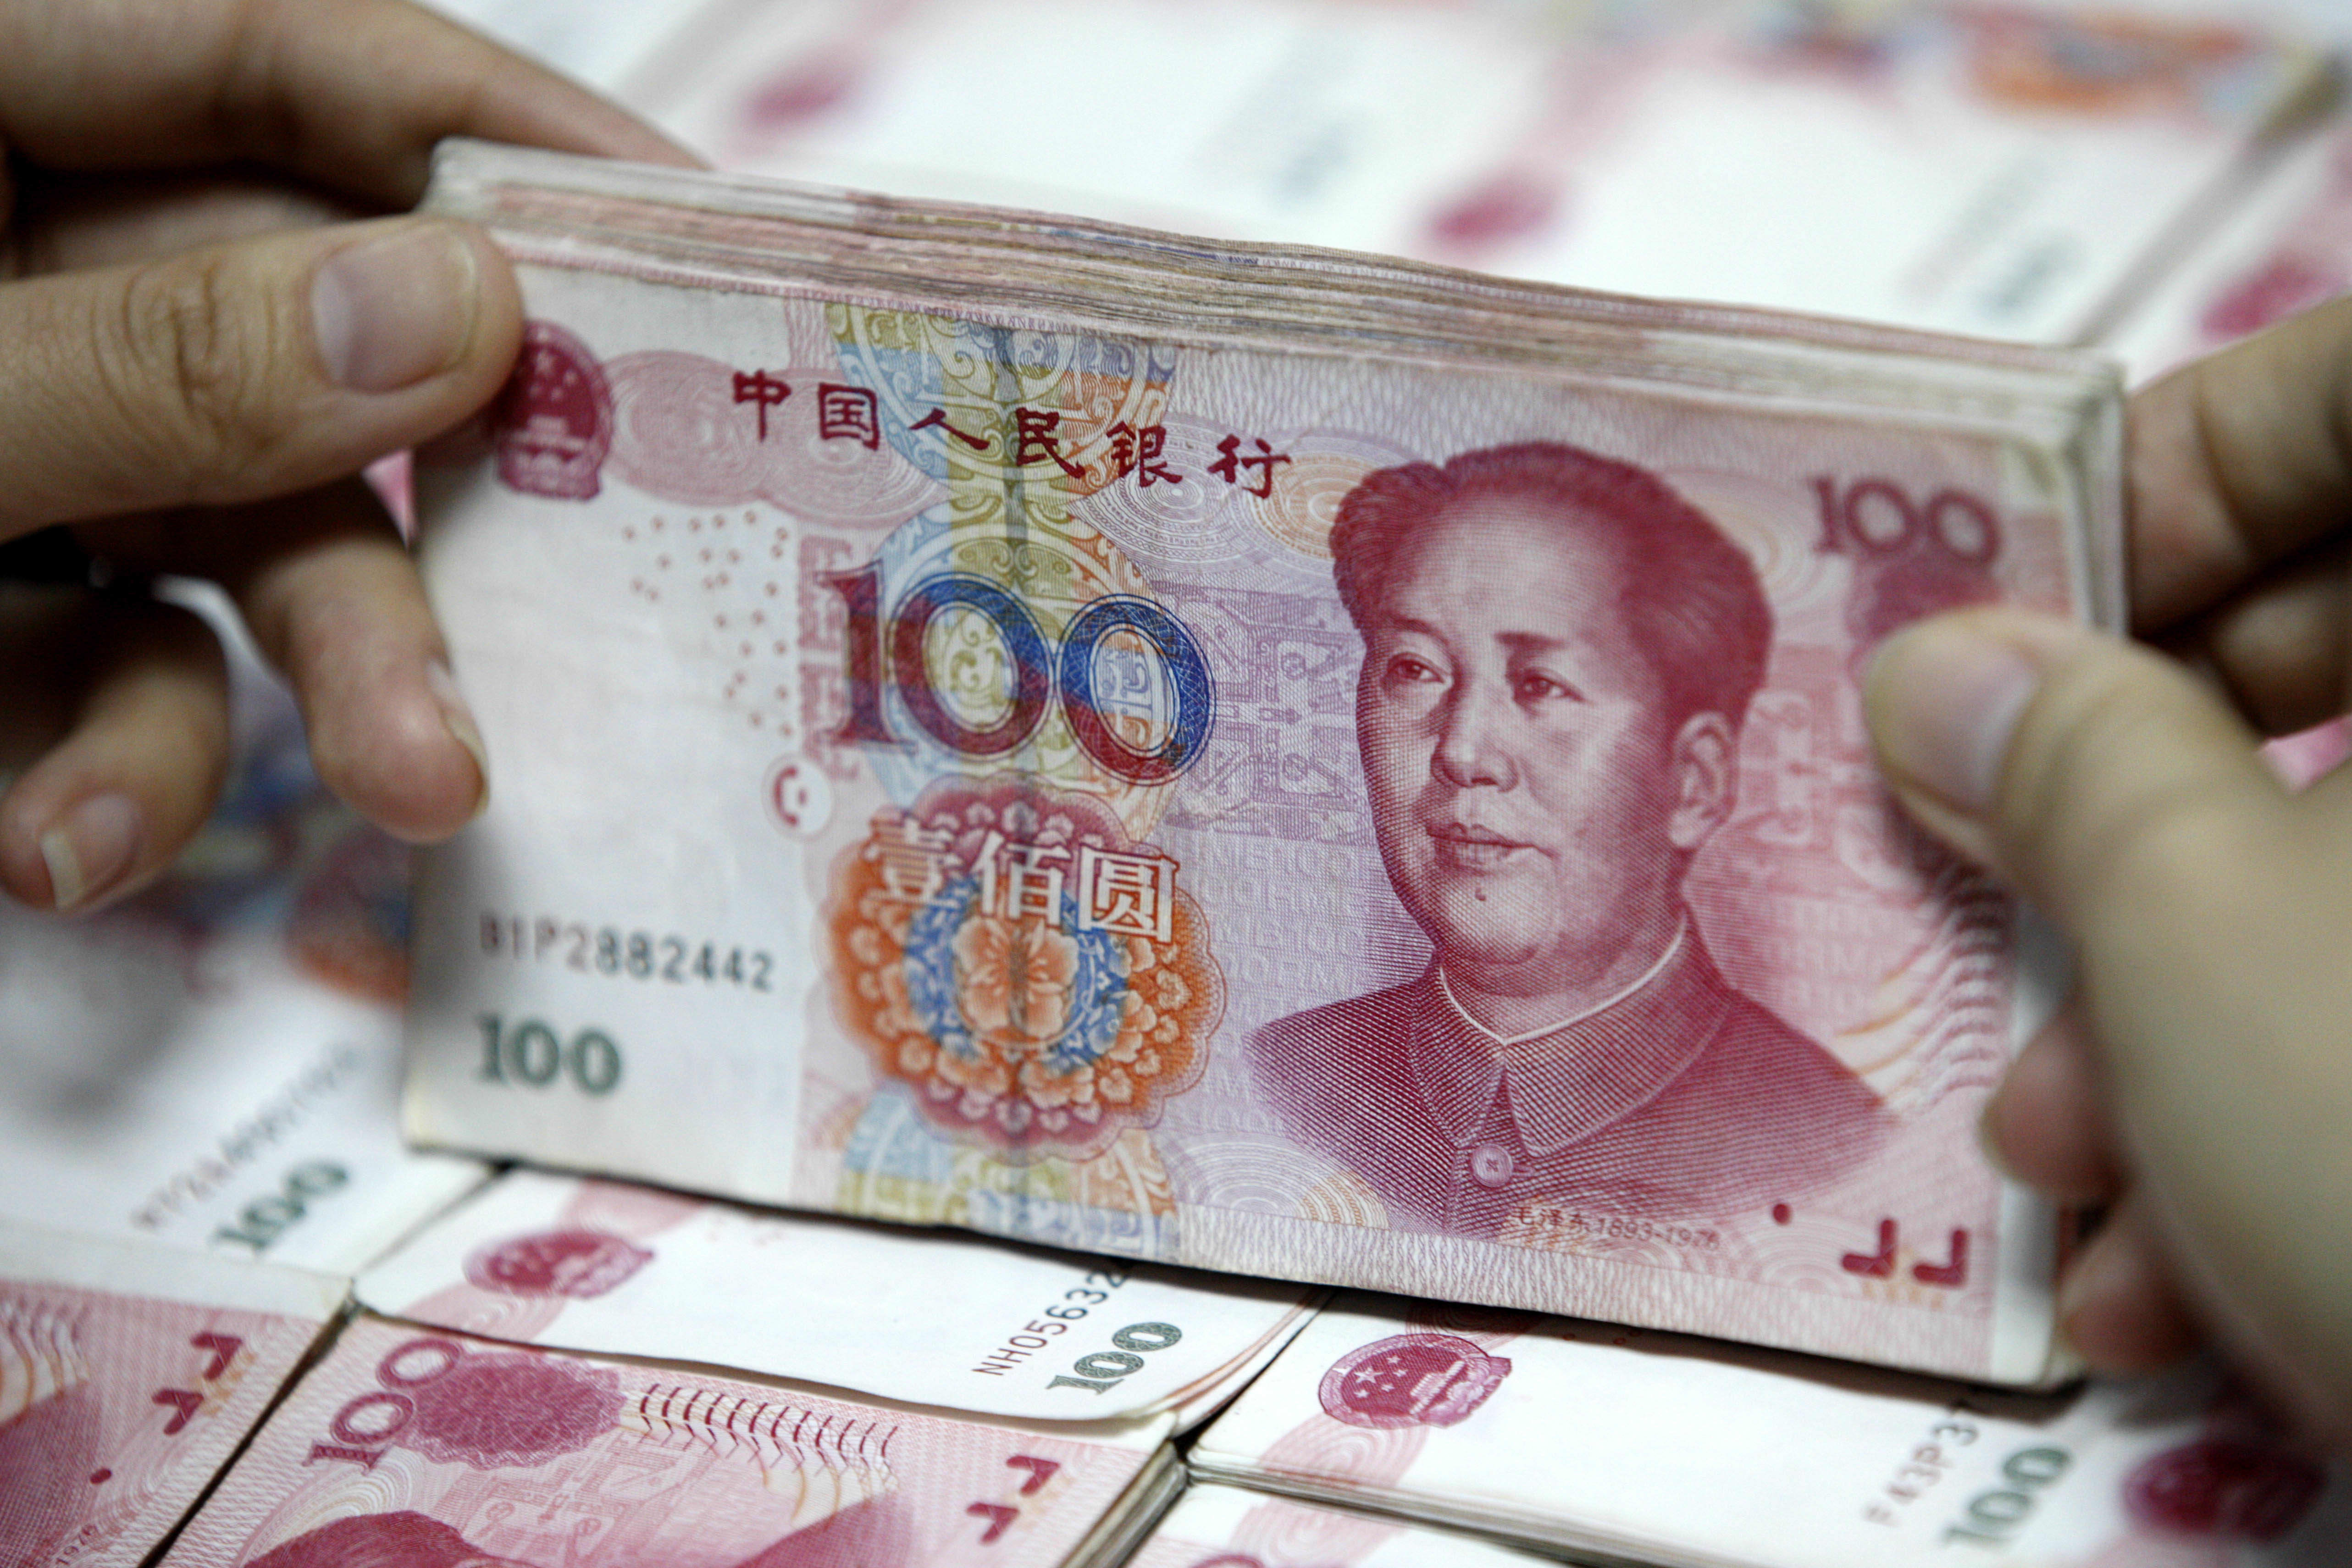 chinese yuan crypto price